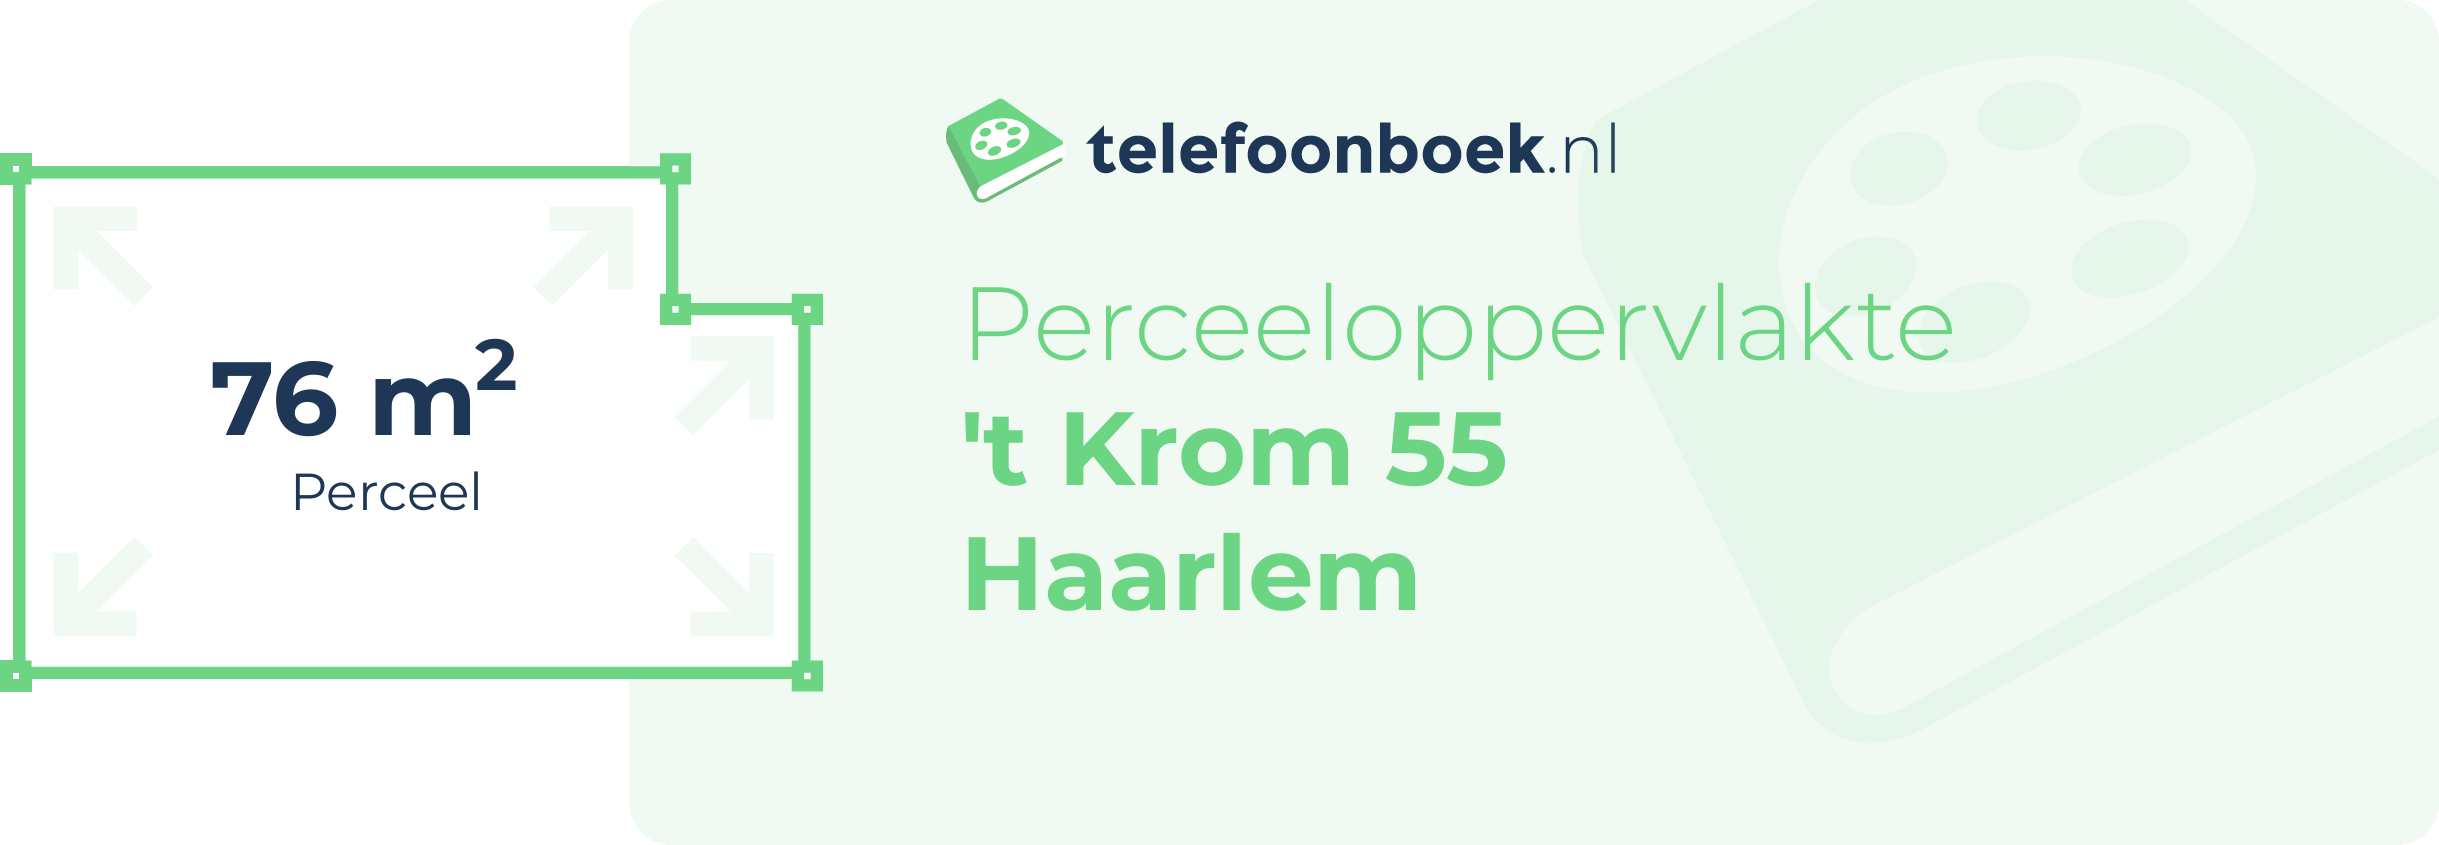 Perceeloppervlakte 't Krom 55 Haarlem